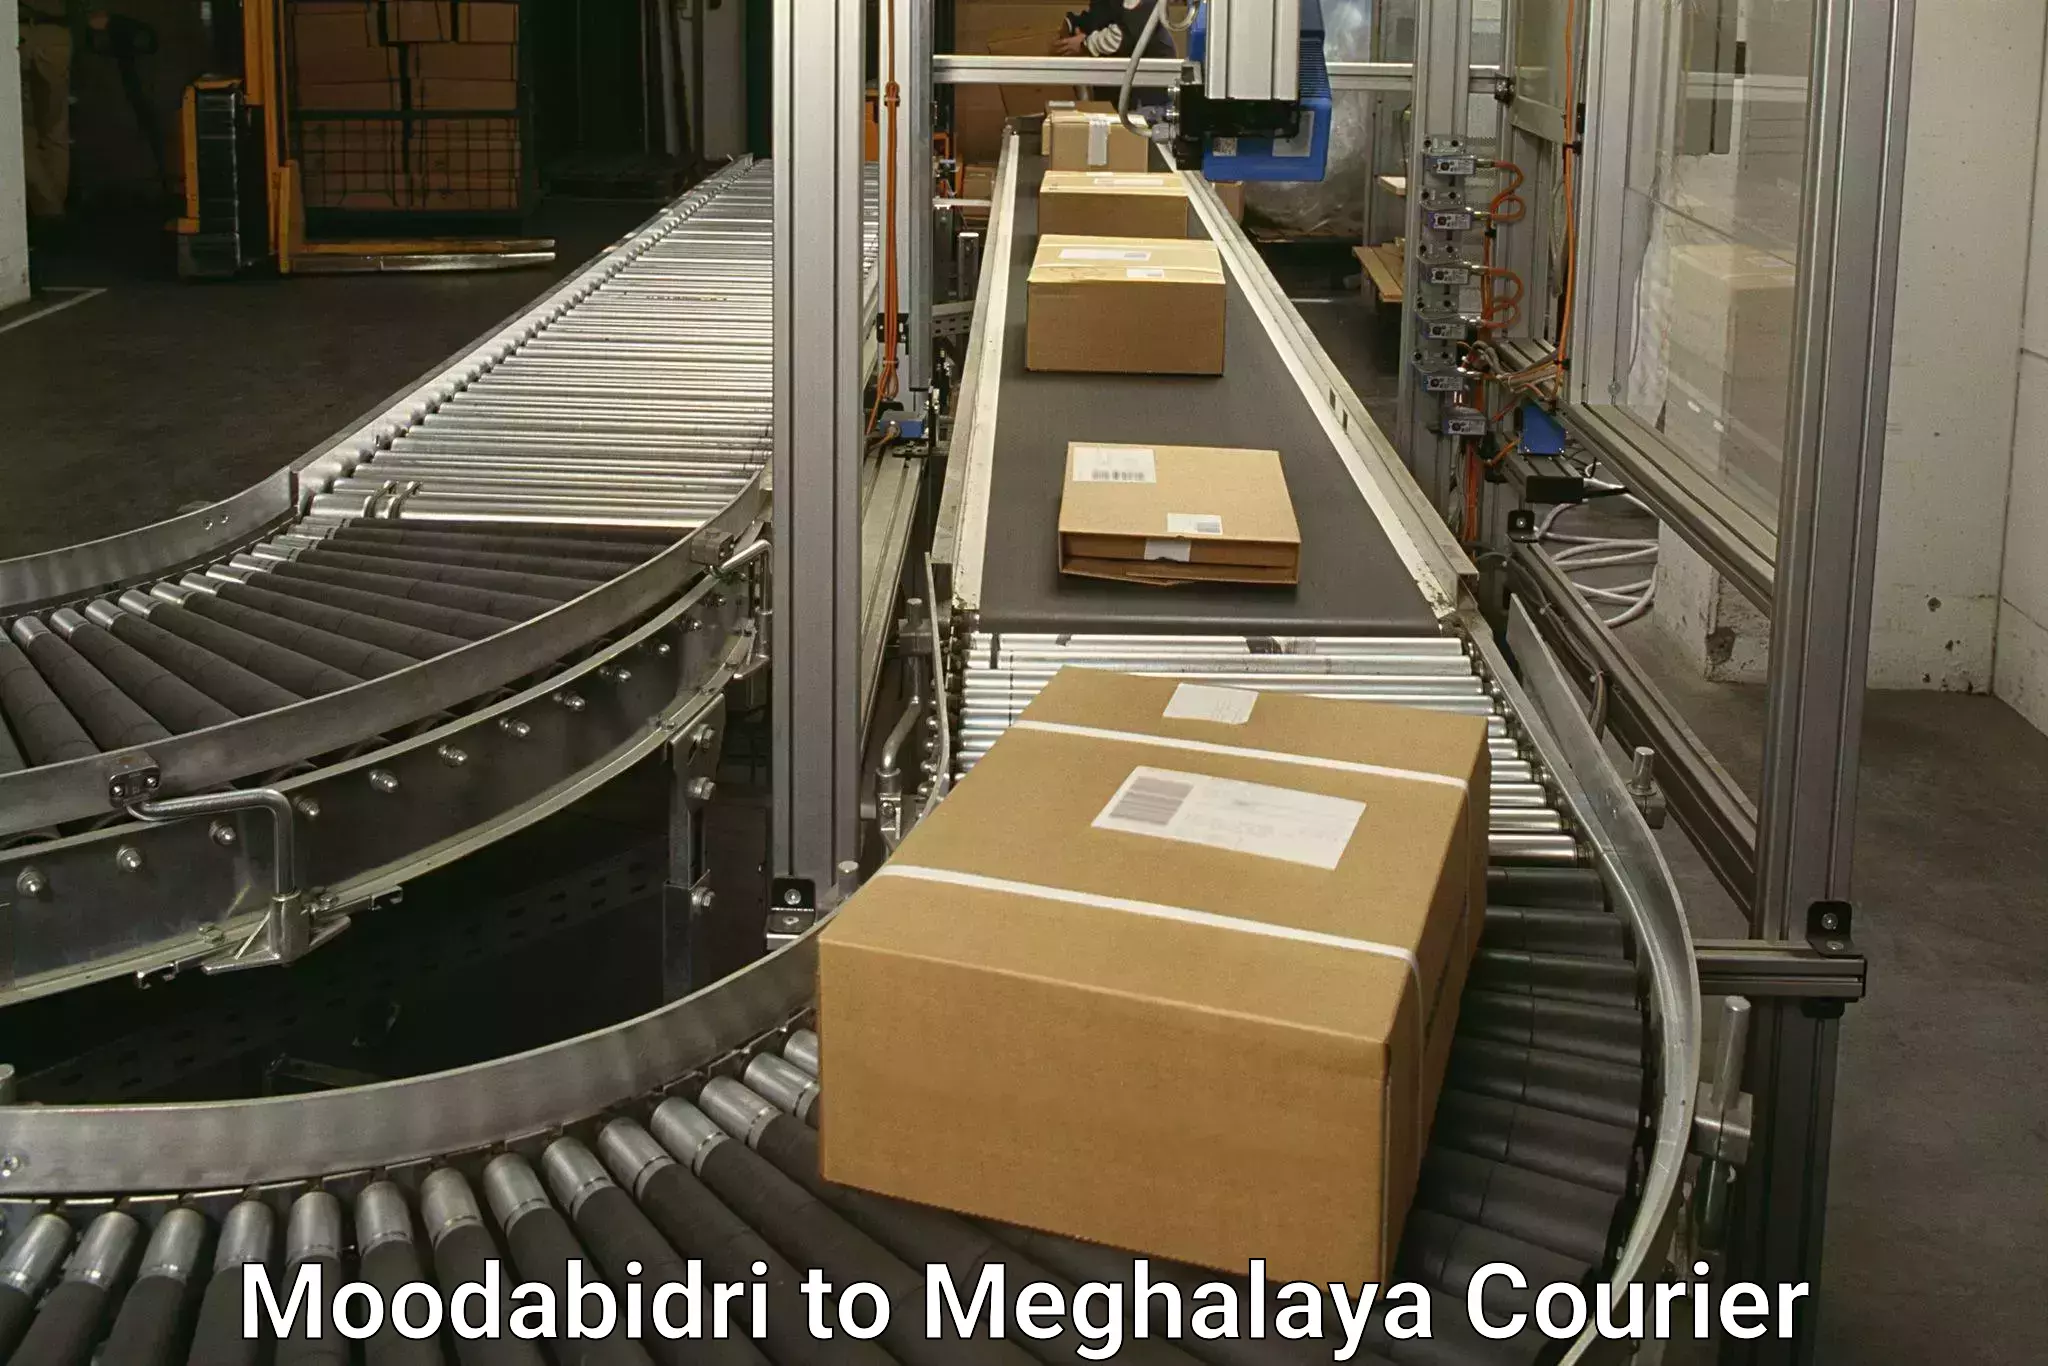 Courier service innovation in Moodabidri to Meghalaya